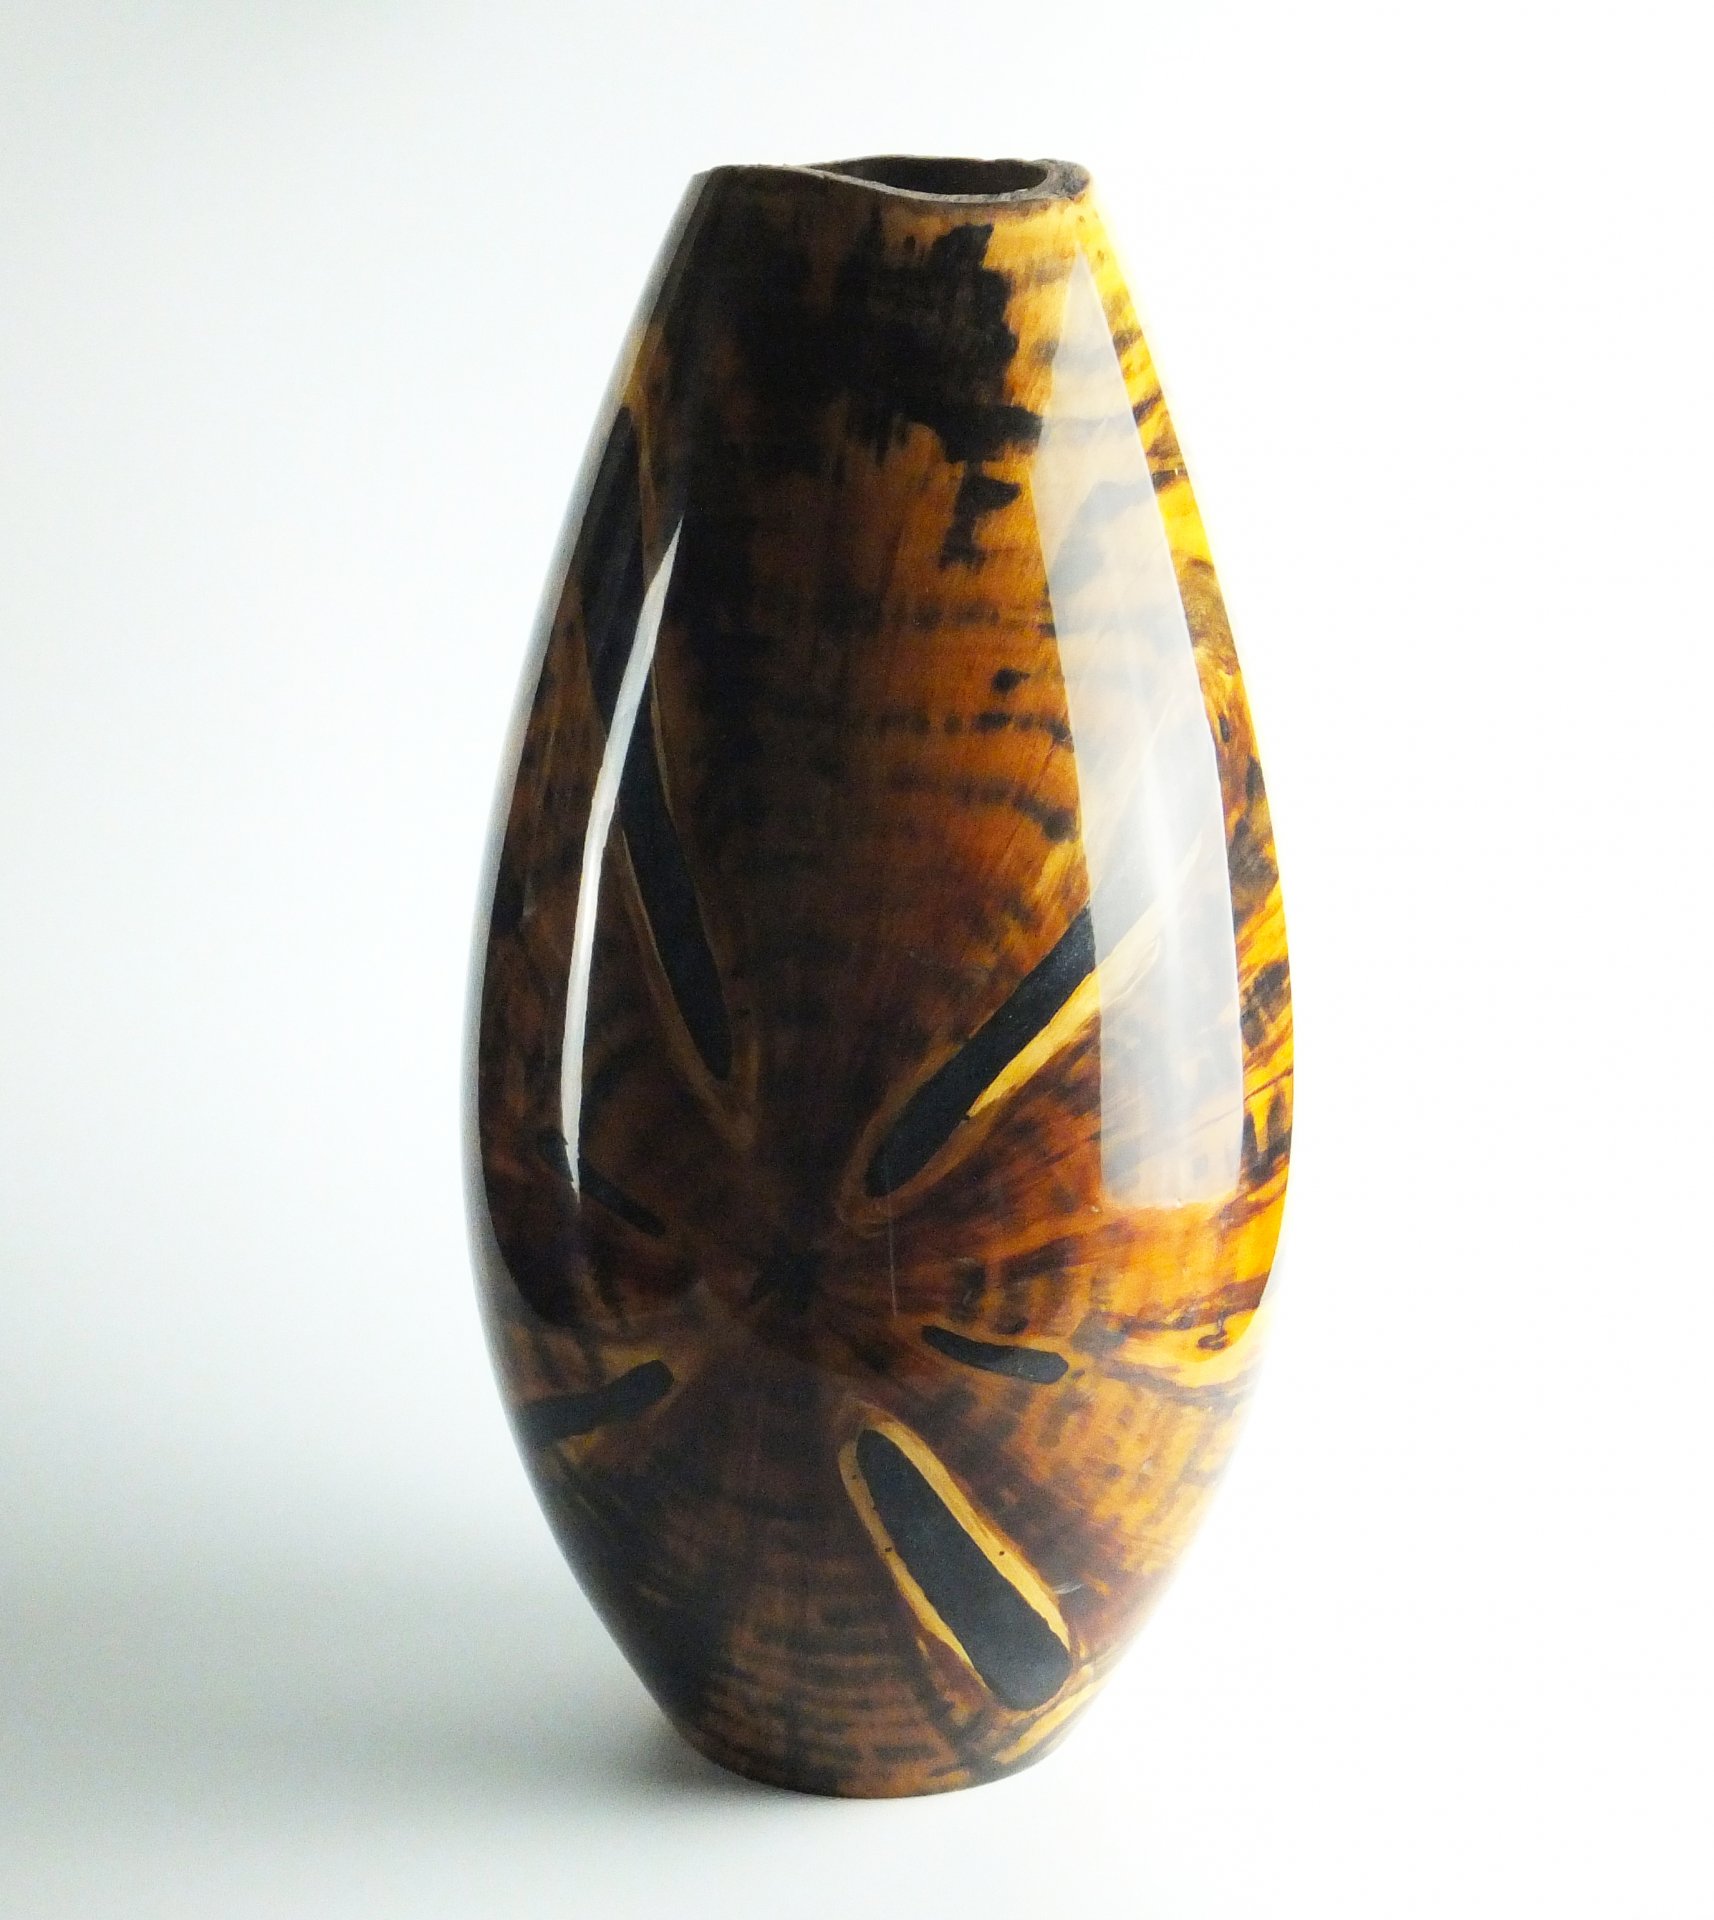 'Bengal' - Norfolk Island Pine nat edge vase 14.5"h